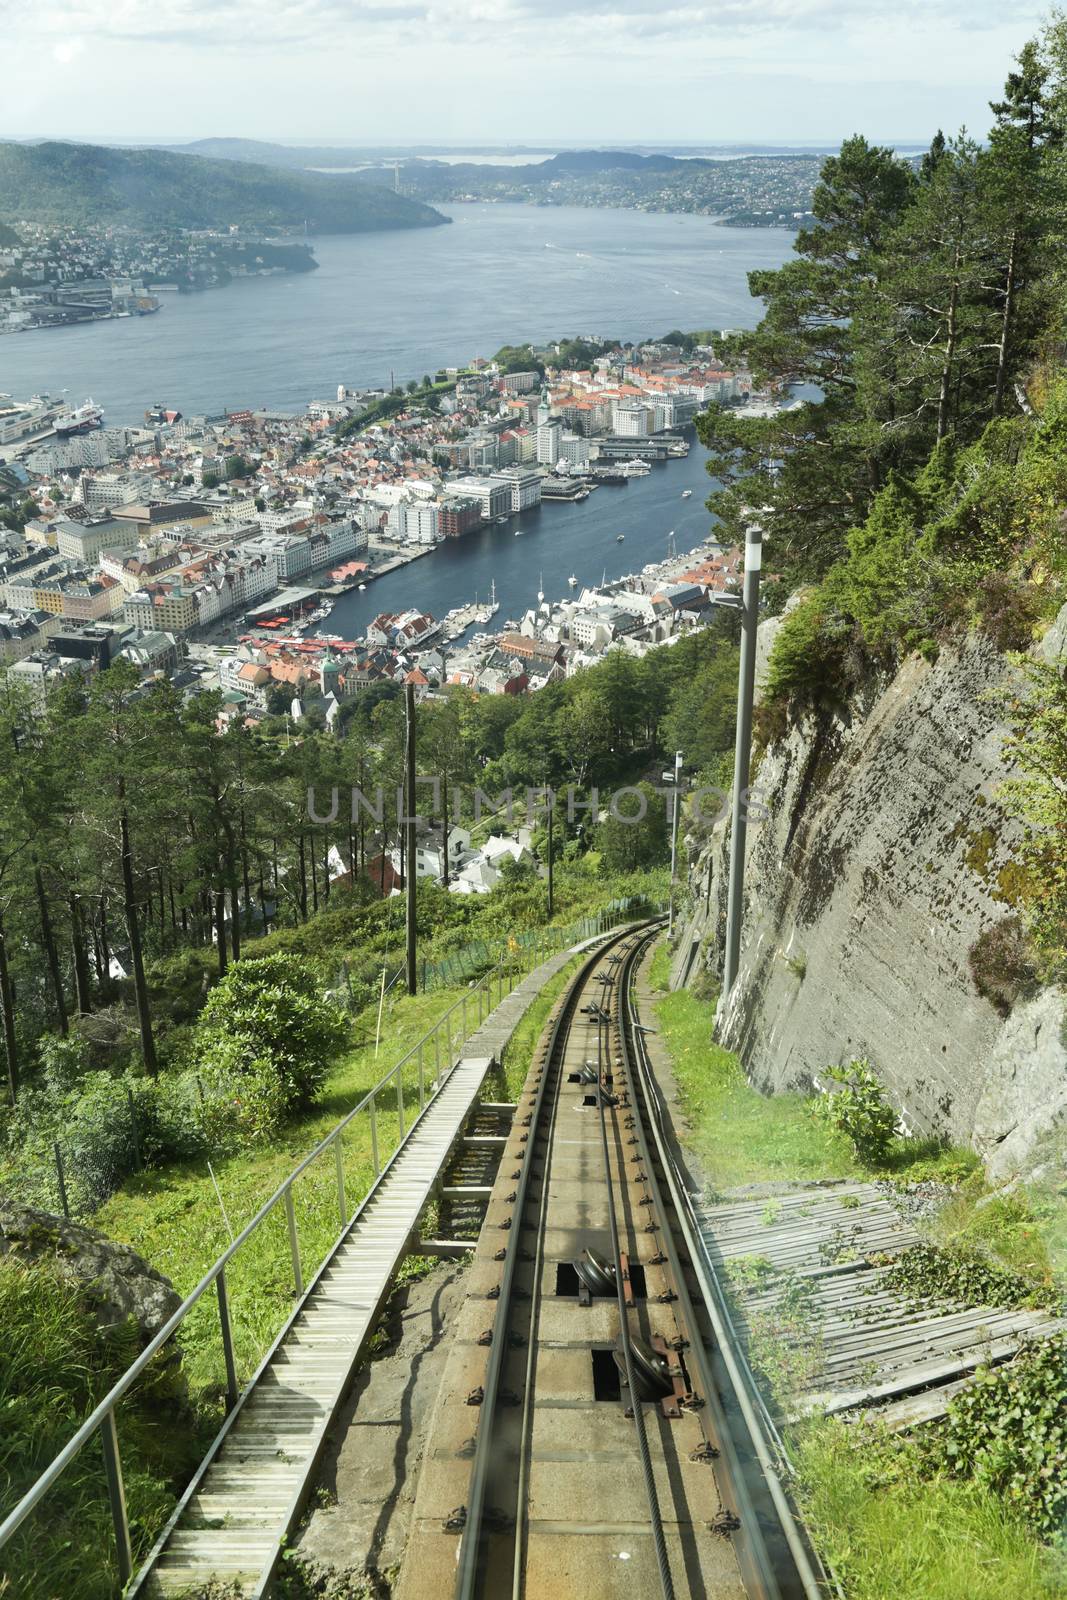 The Floibanen funicular by Kartouchken